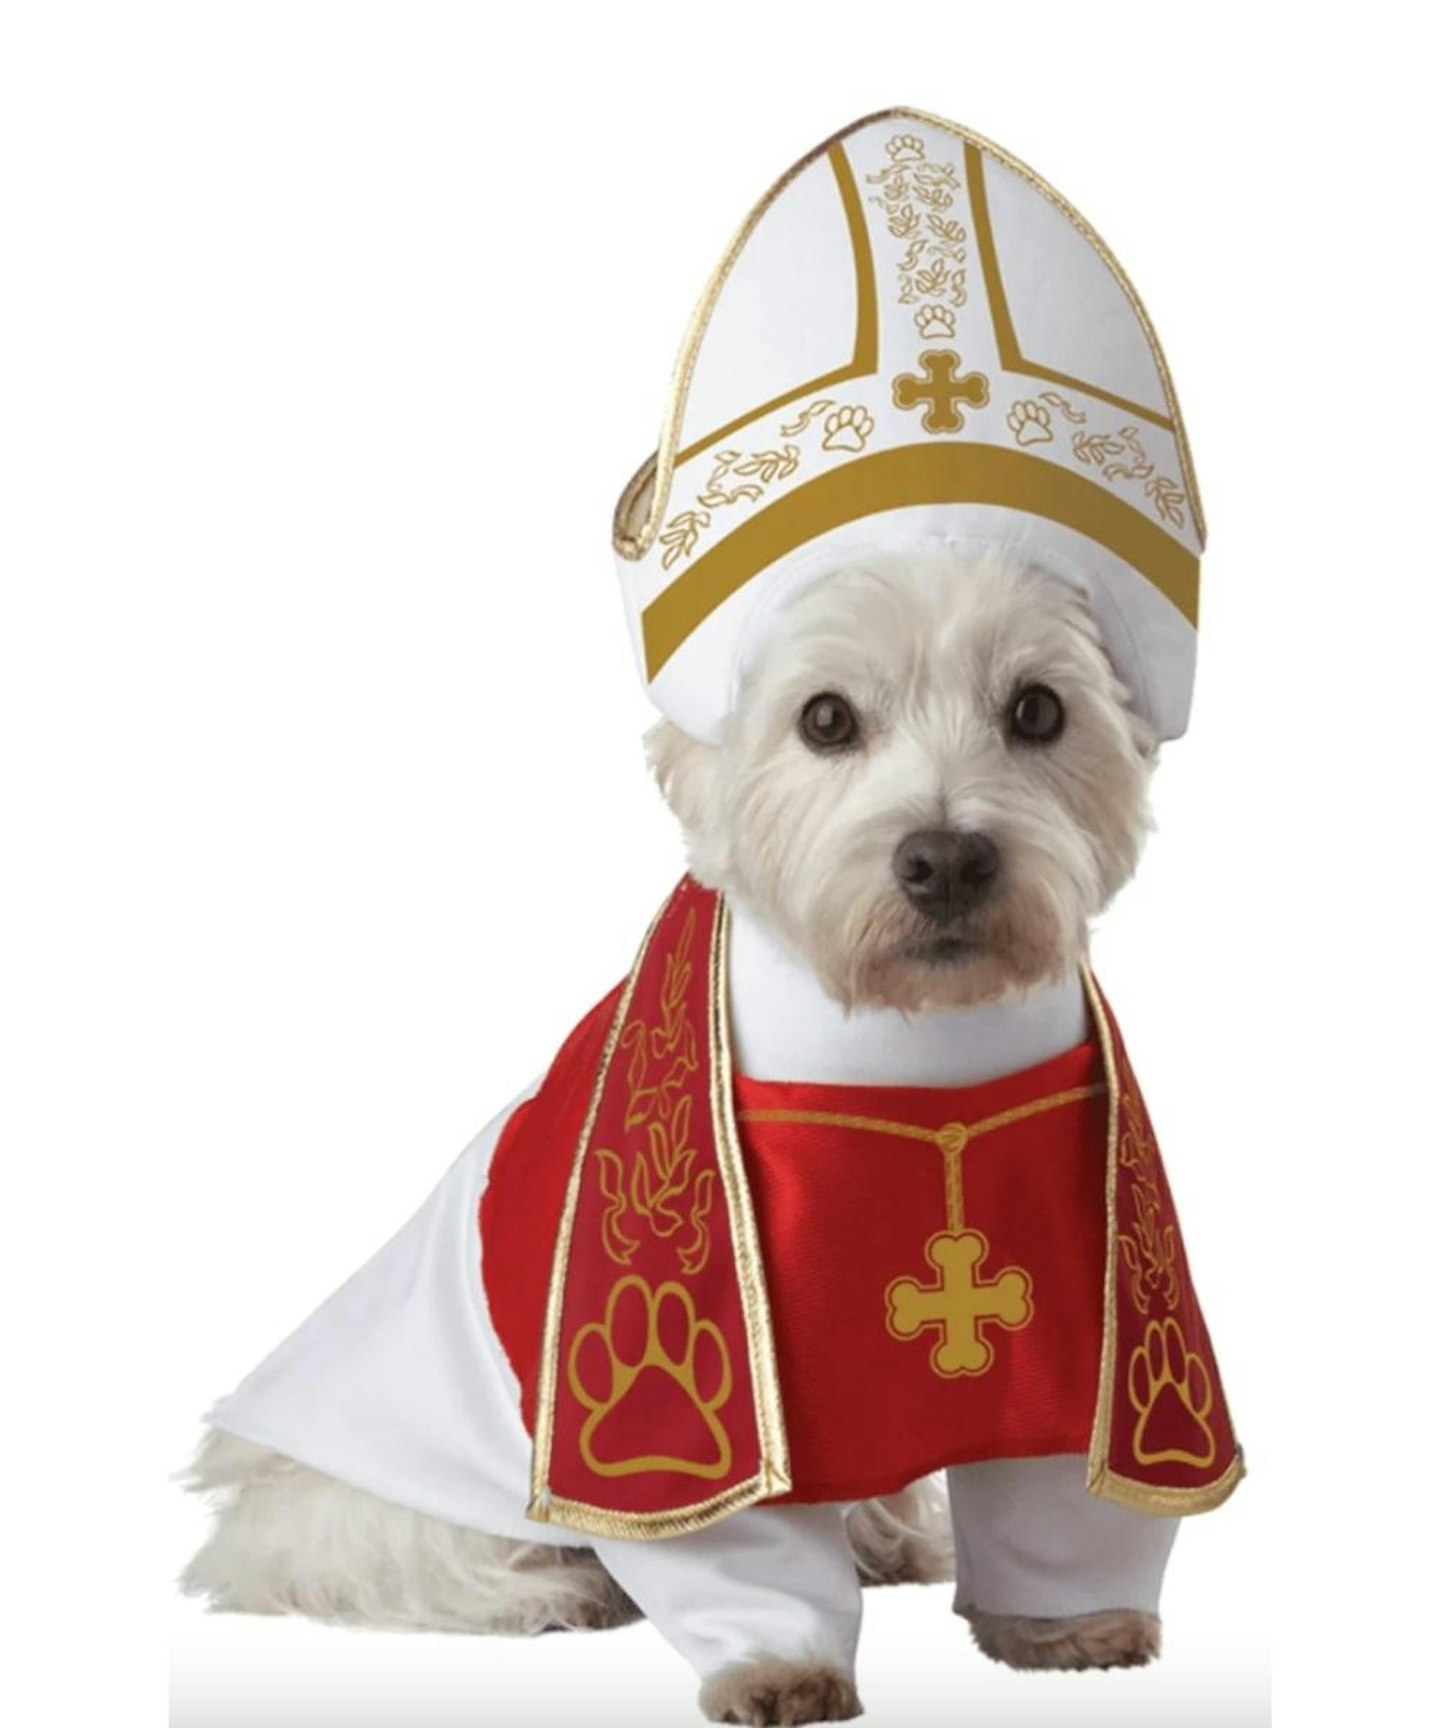 Fancydress.com Holy Hound Dog Costume